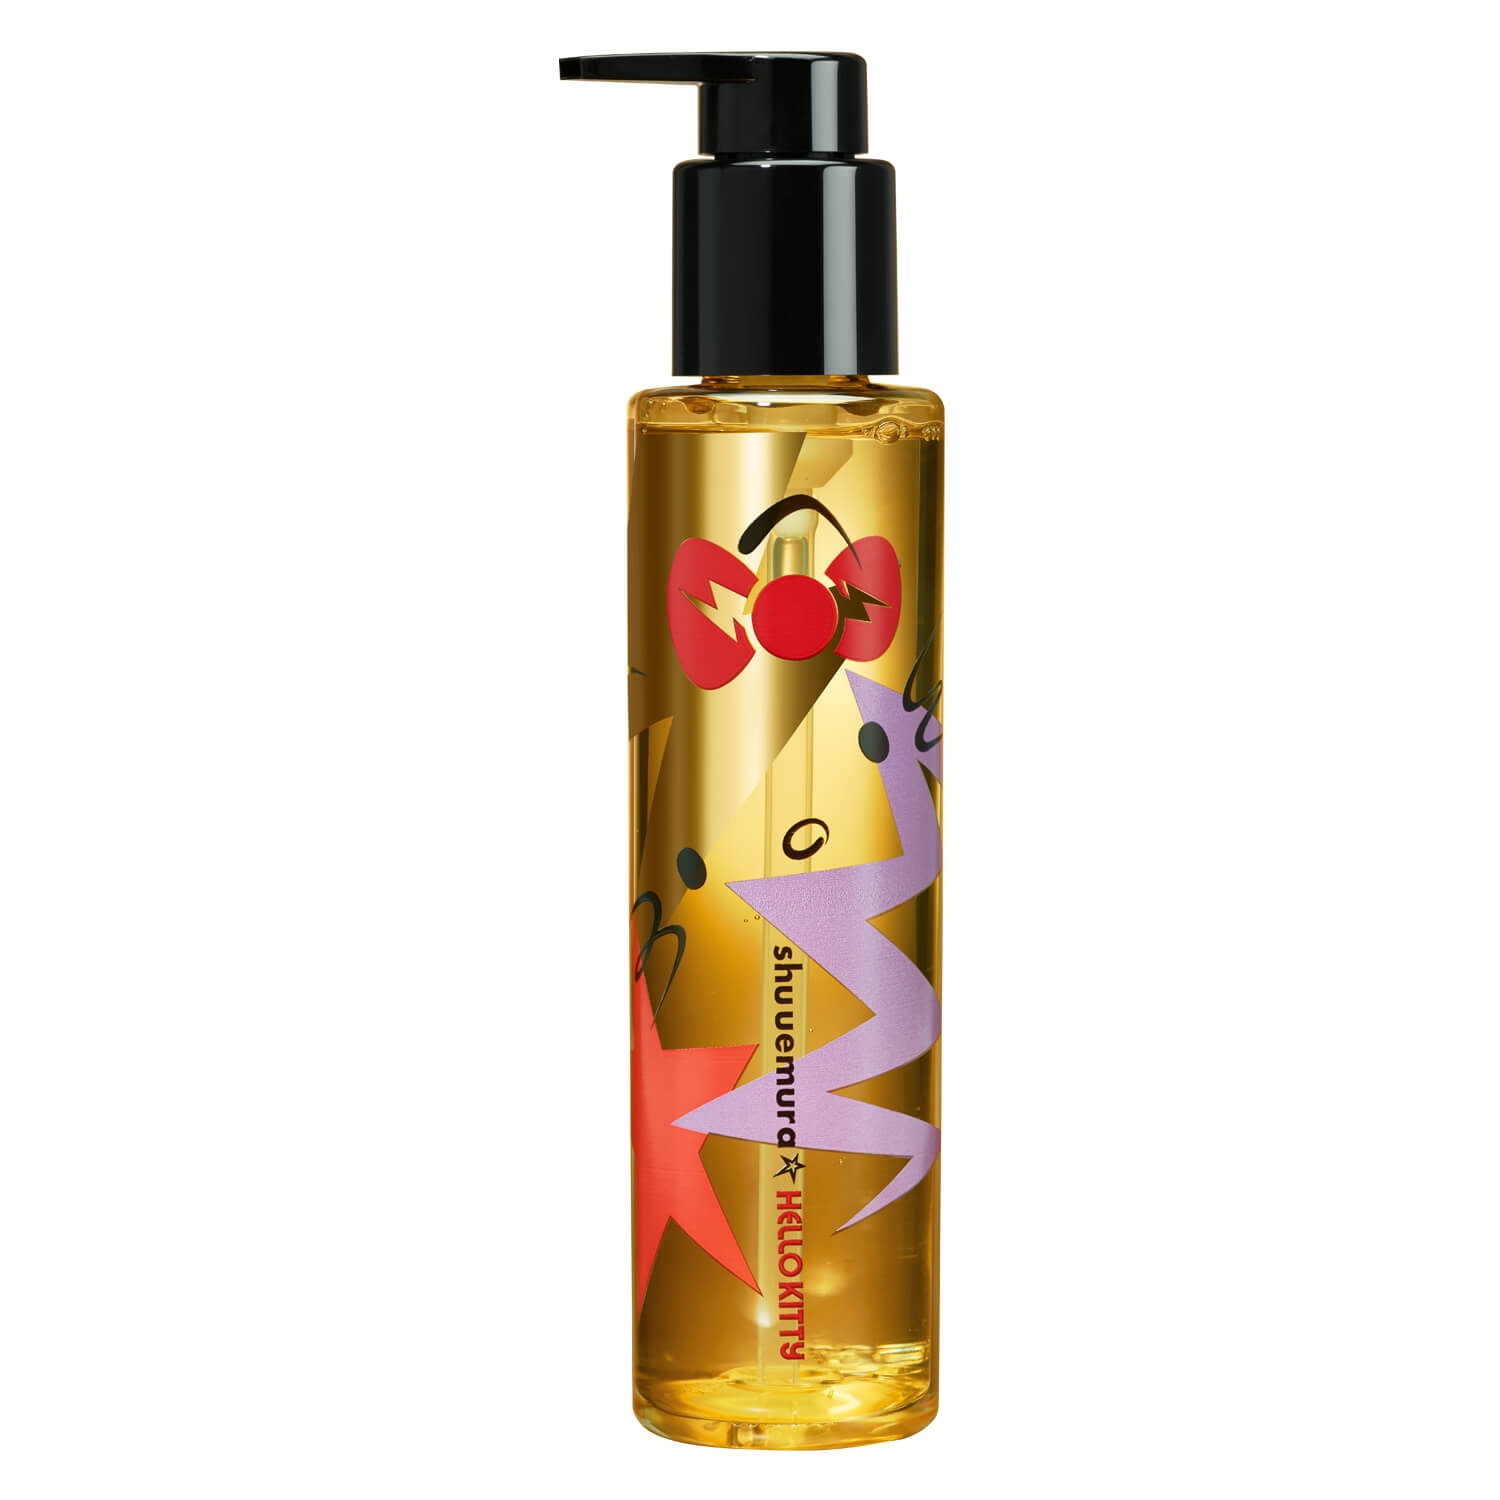 Produktbild von Essence Absolue Nourishing Protective Oil Hello Kitty Edition